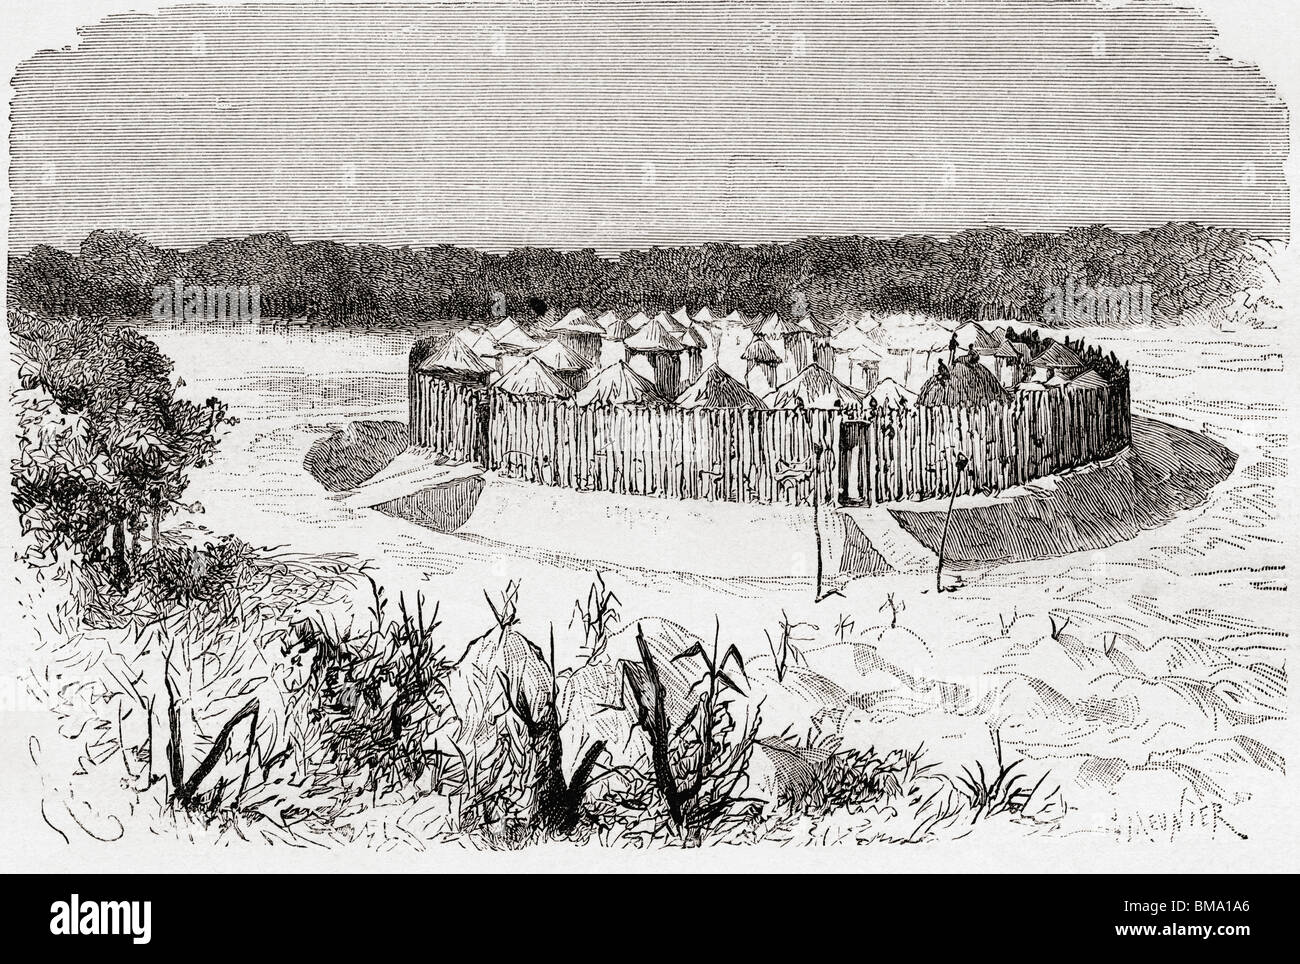 Das Dorf von Combo-Combo, Zentral-Afrika im 19. Jahrhundert. Stockfoto